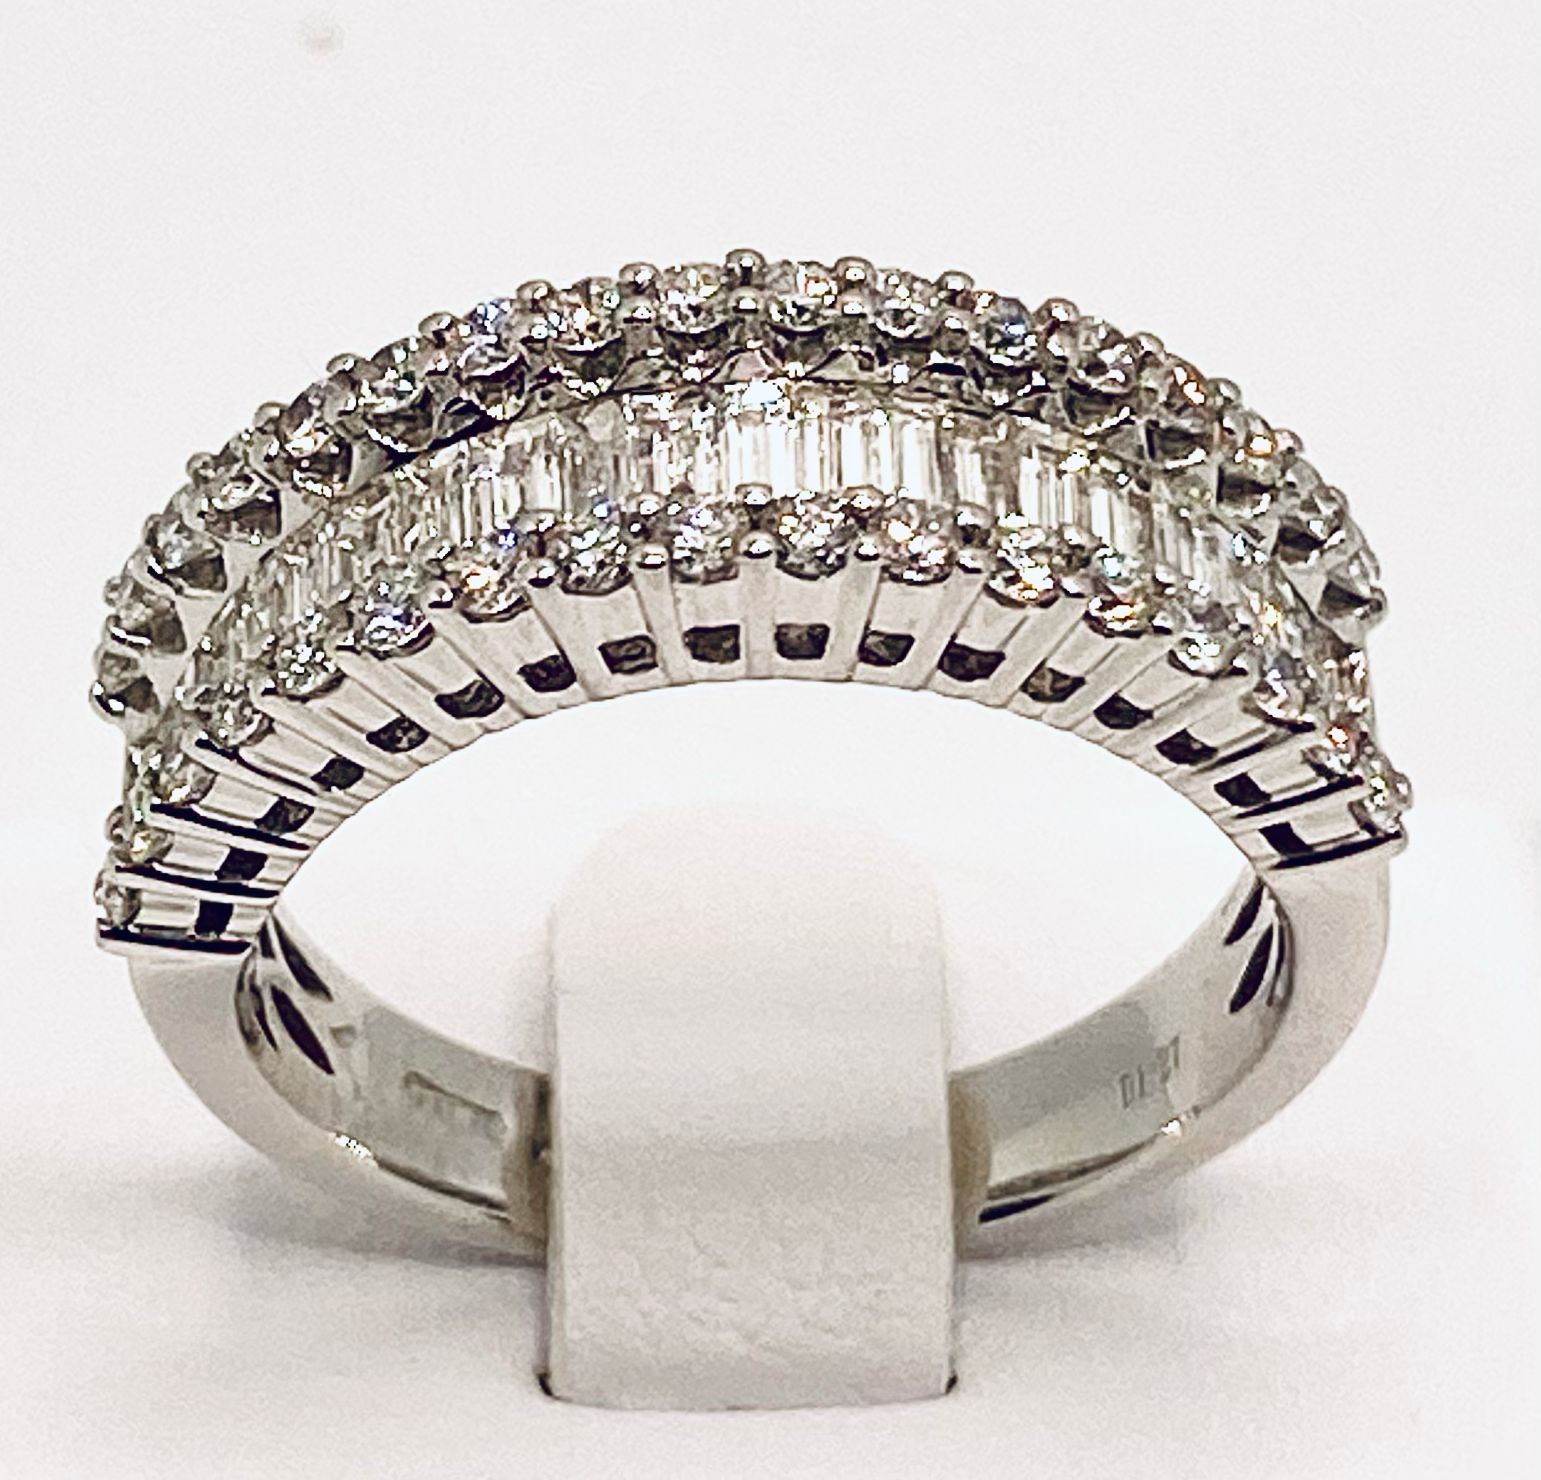 Veretta ring with baguette diamonds art. 3901RW